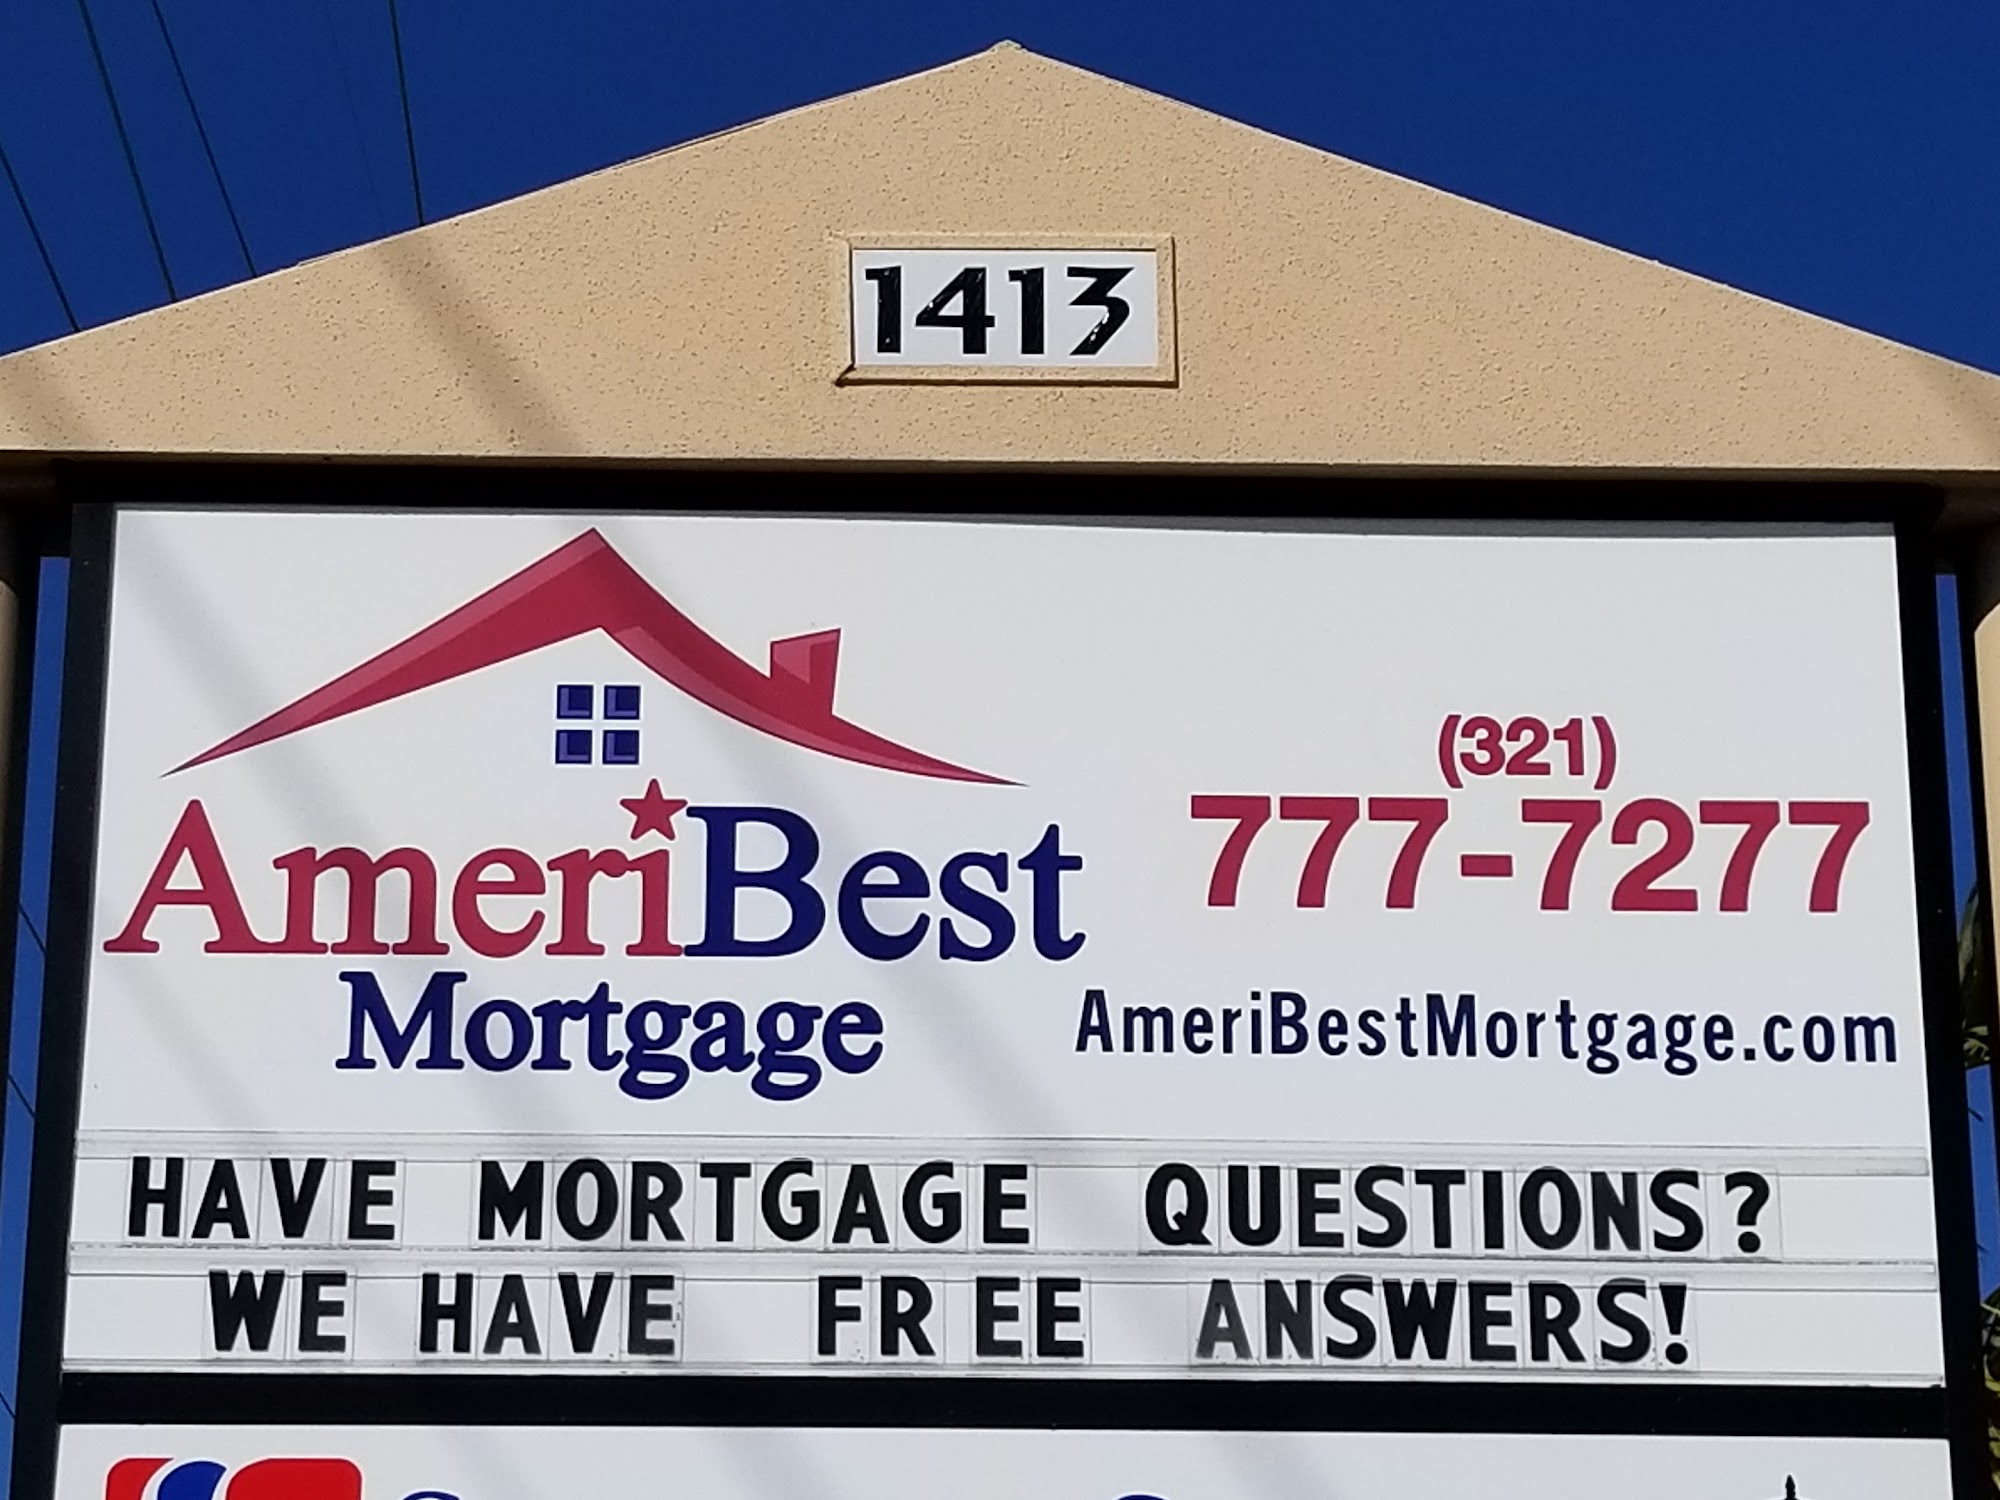 AmeriBest Mortgage